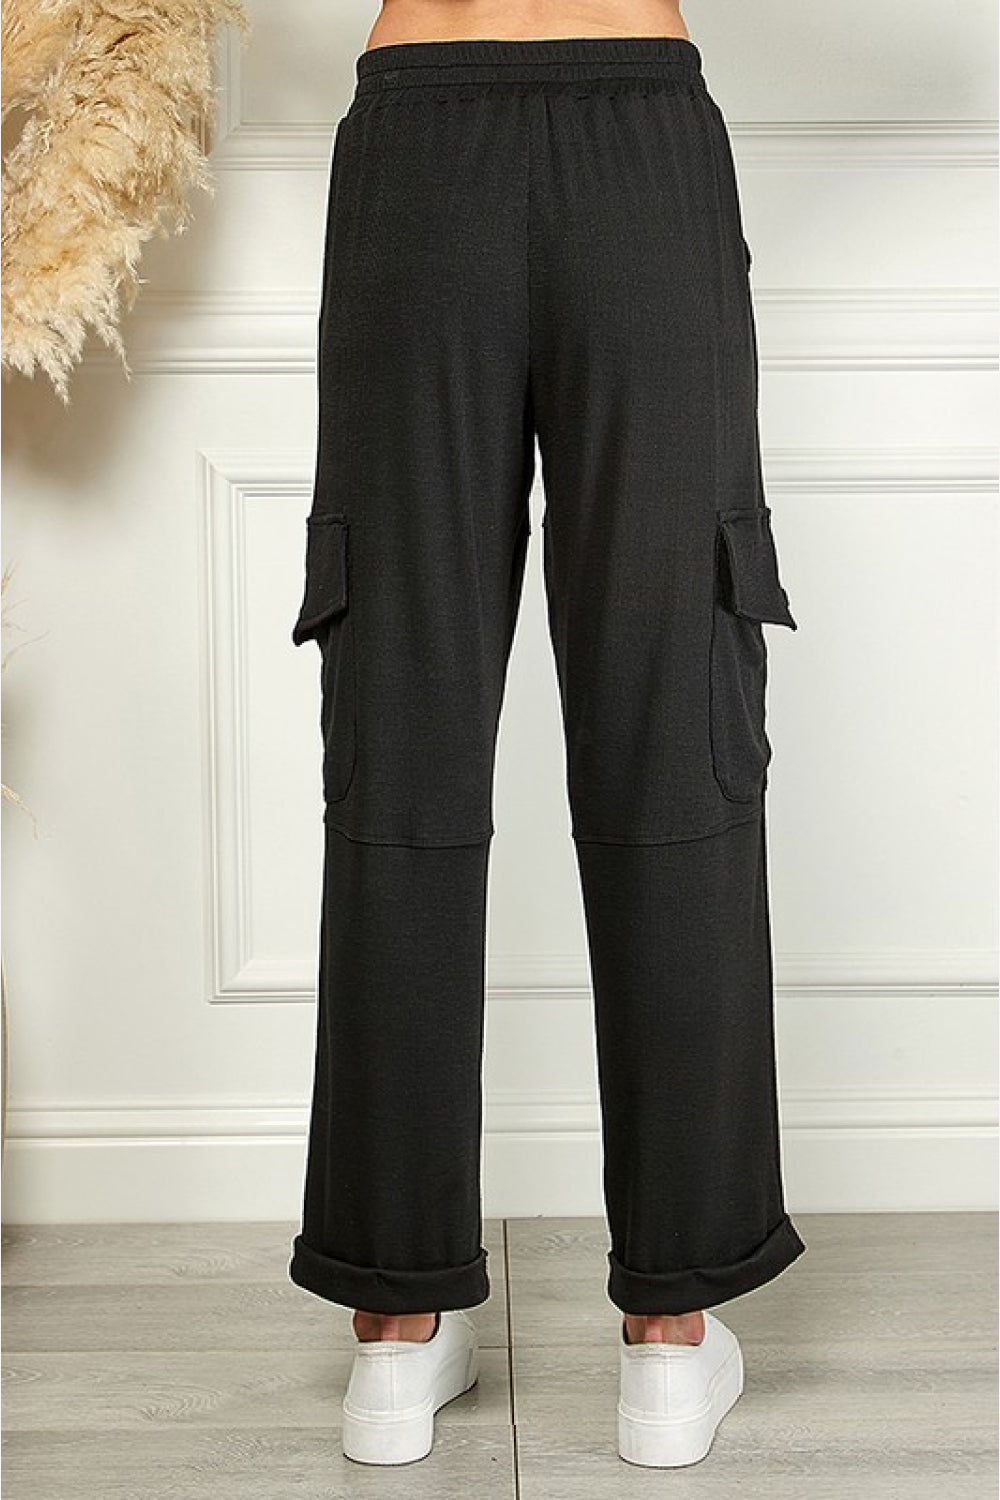 Blumin Apparel Full Size Elastic Waist Cuffed Cargo Pants